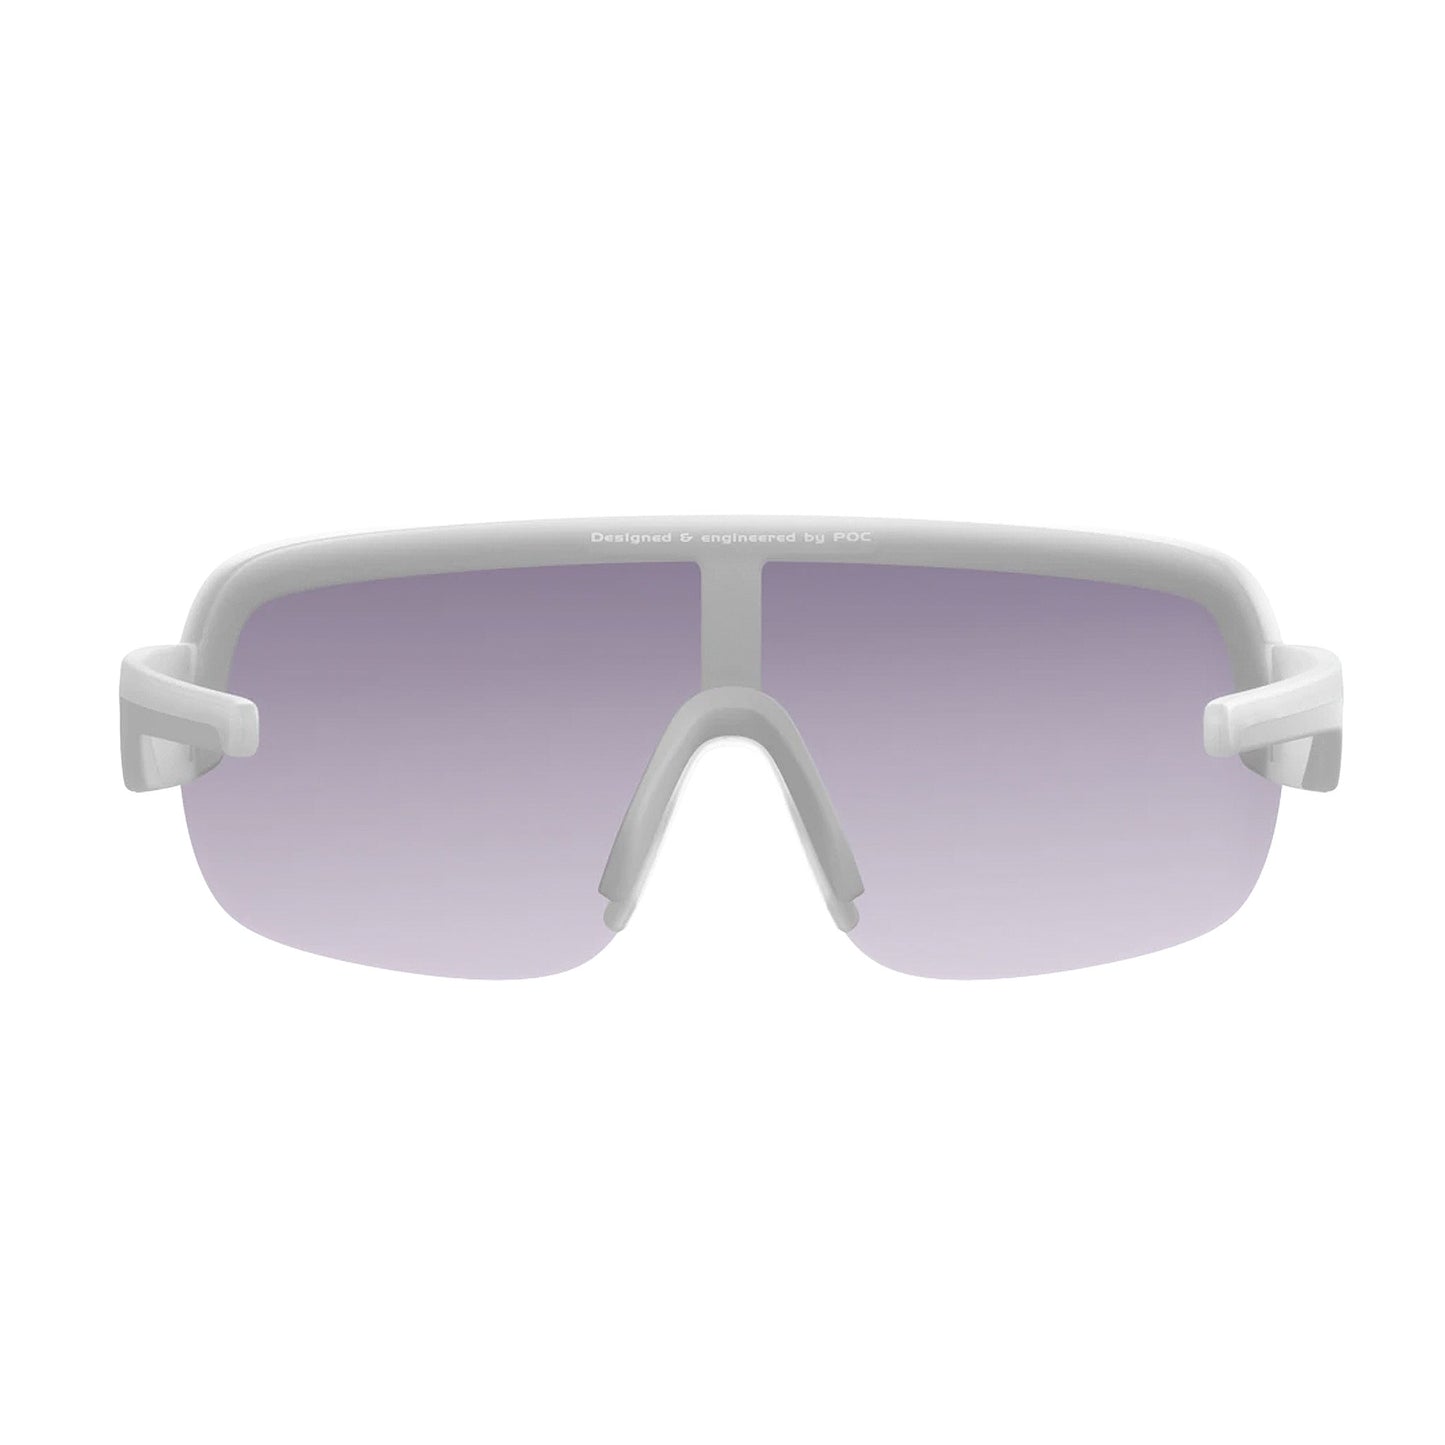 Poc Aim Cycling Sunglasses - Transparant Crystal, Silver Mirror Lens